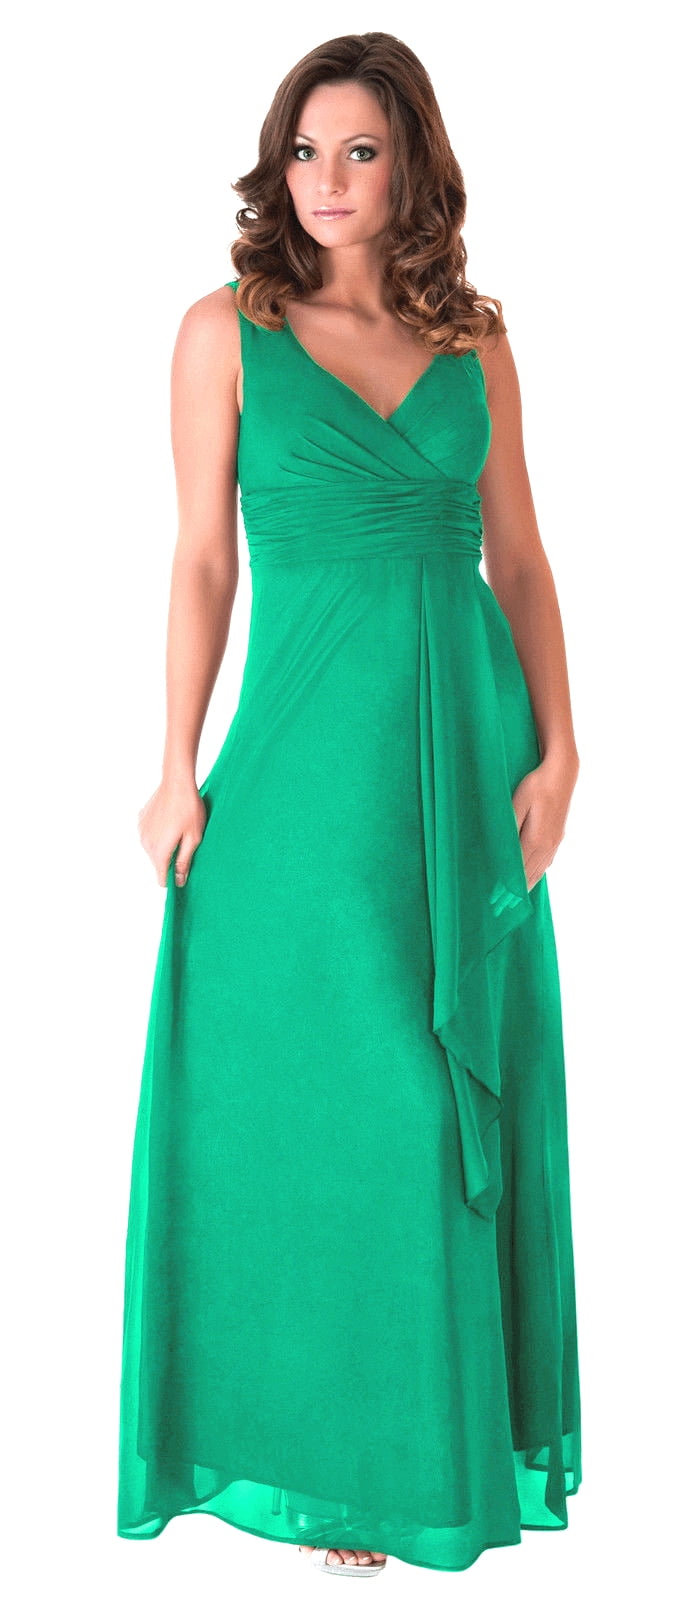 Faship - Faship Womens V-Neck Full Length Formal Dress Emerald ...